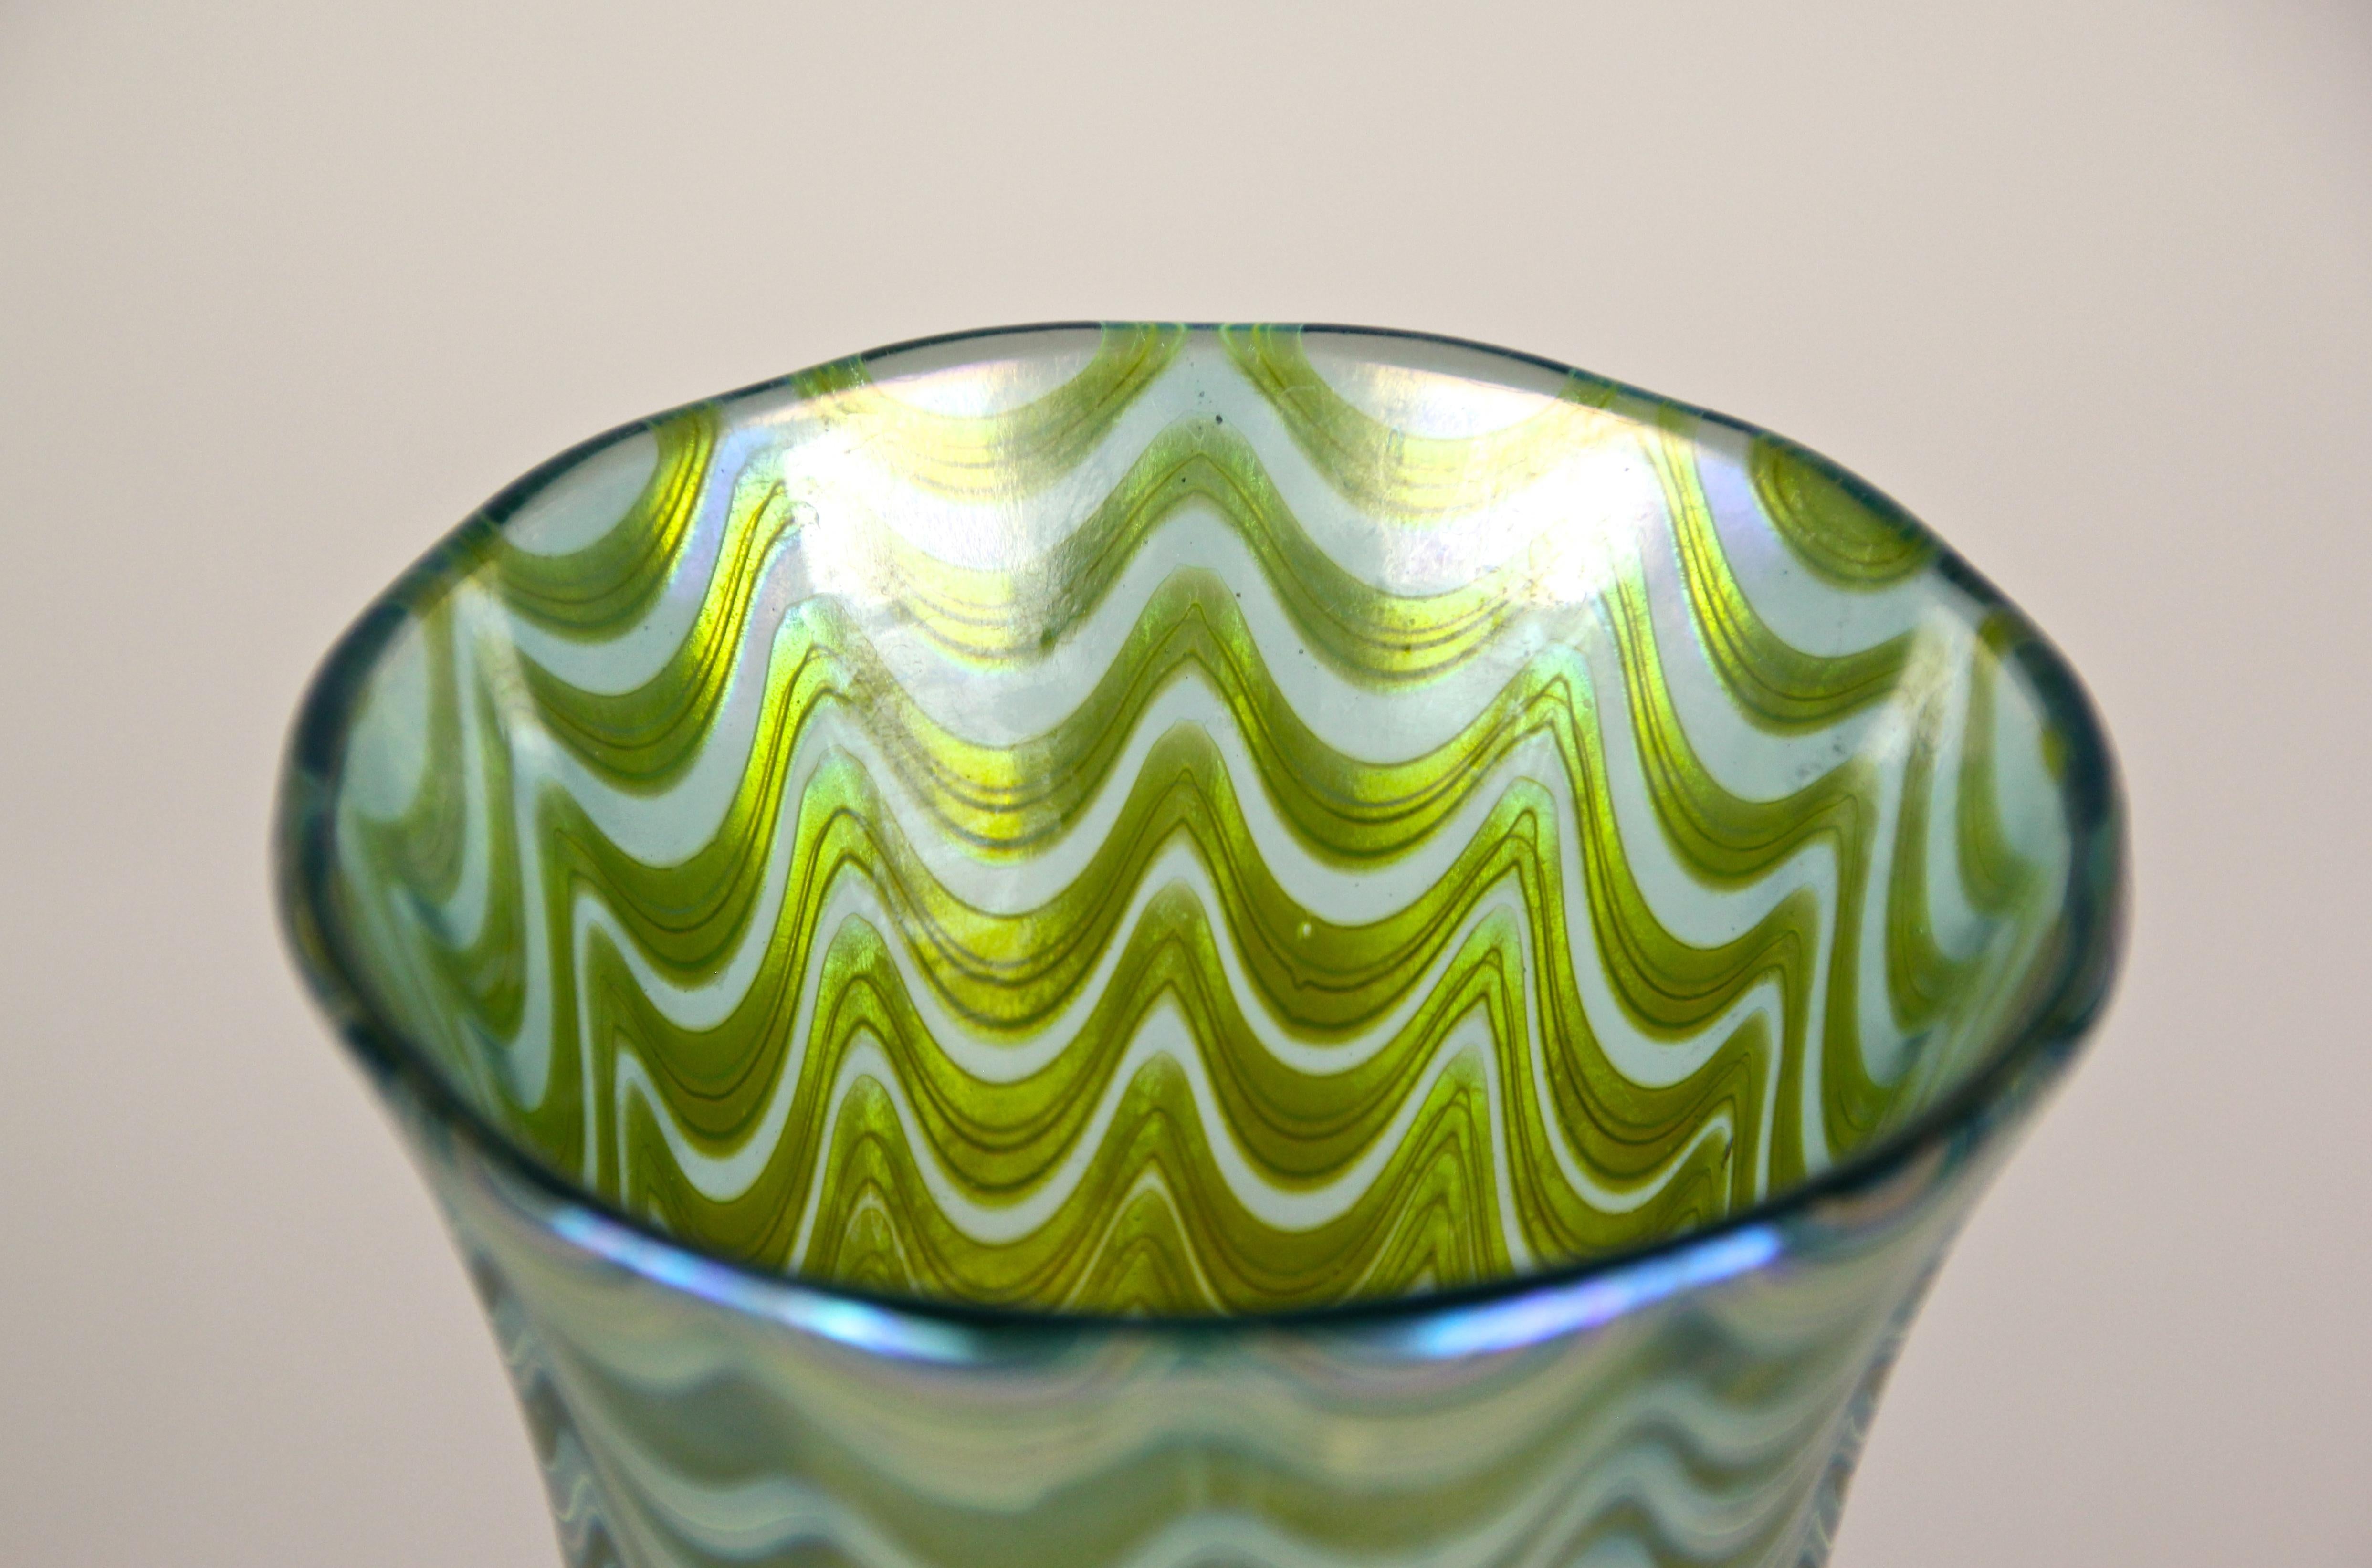 Art Nouveau Loetz Witwe Glass Vase Phaenomen Genre 6893 Green, Bohemia, circa 1899 For Sale